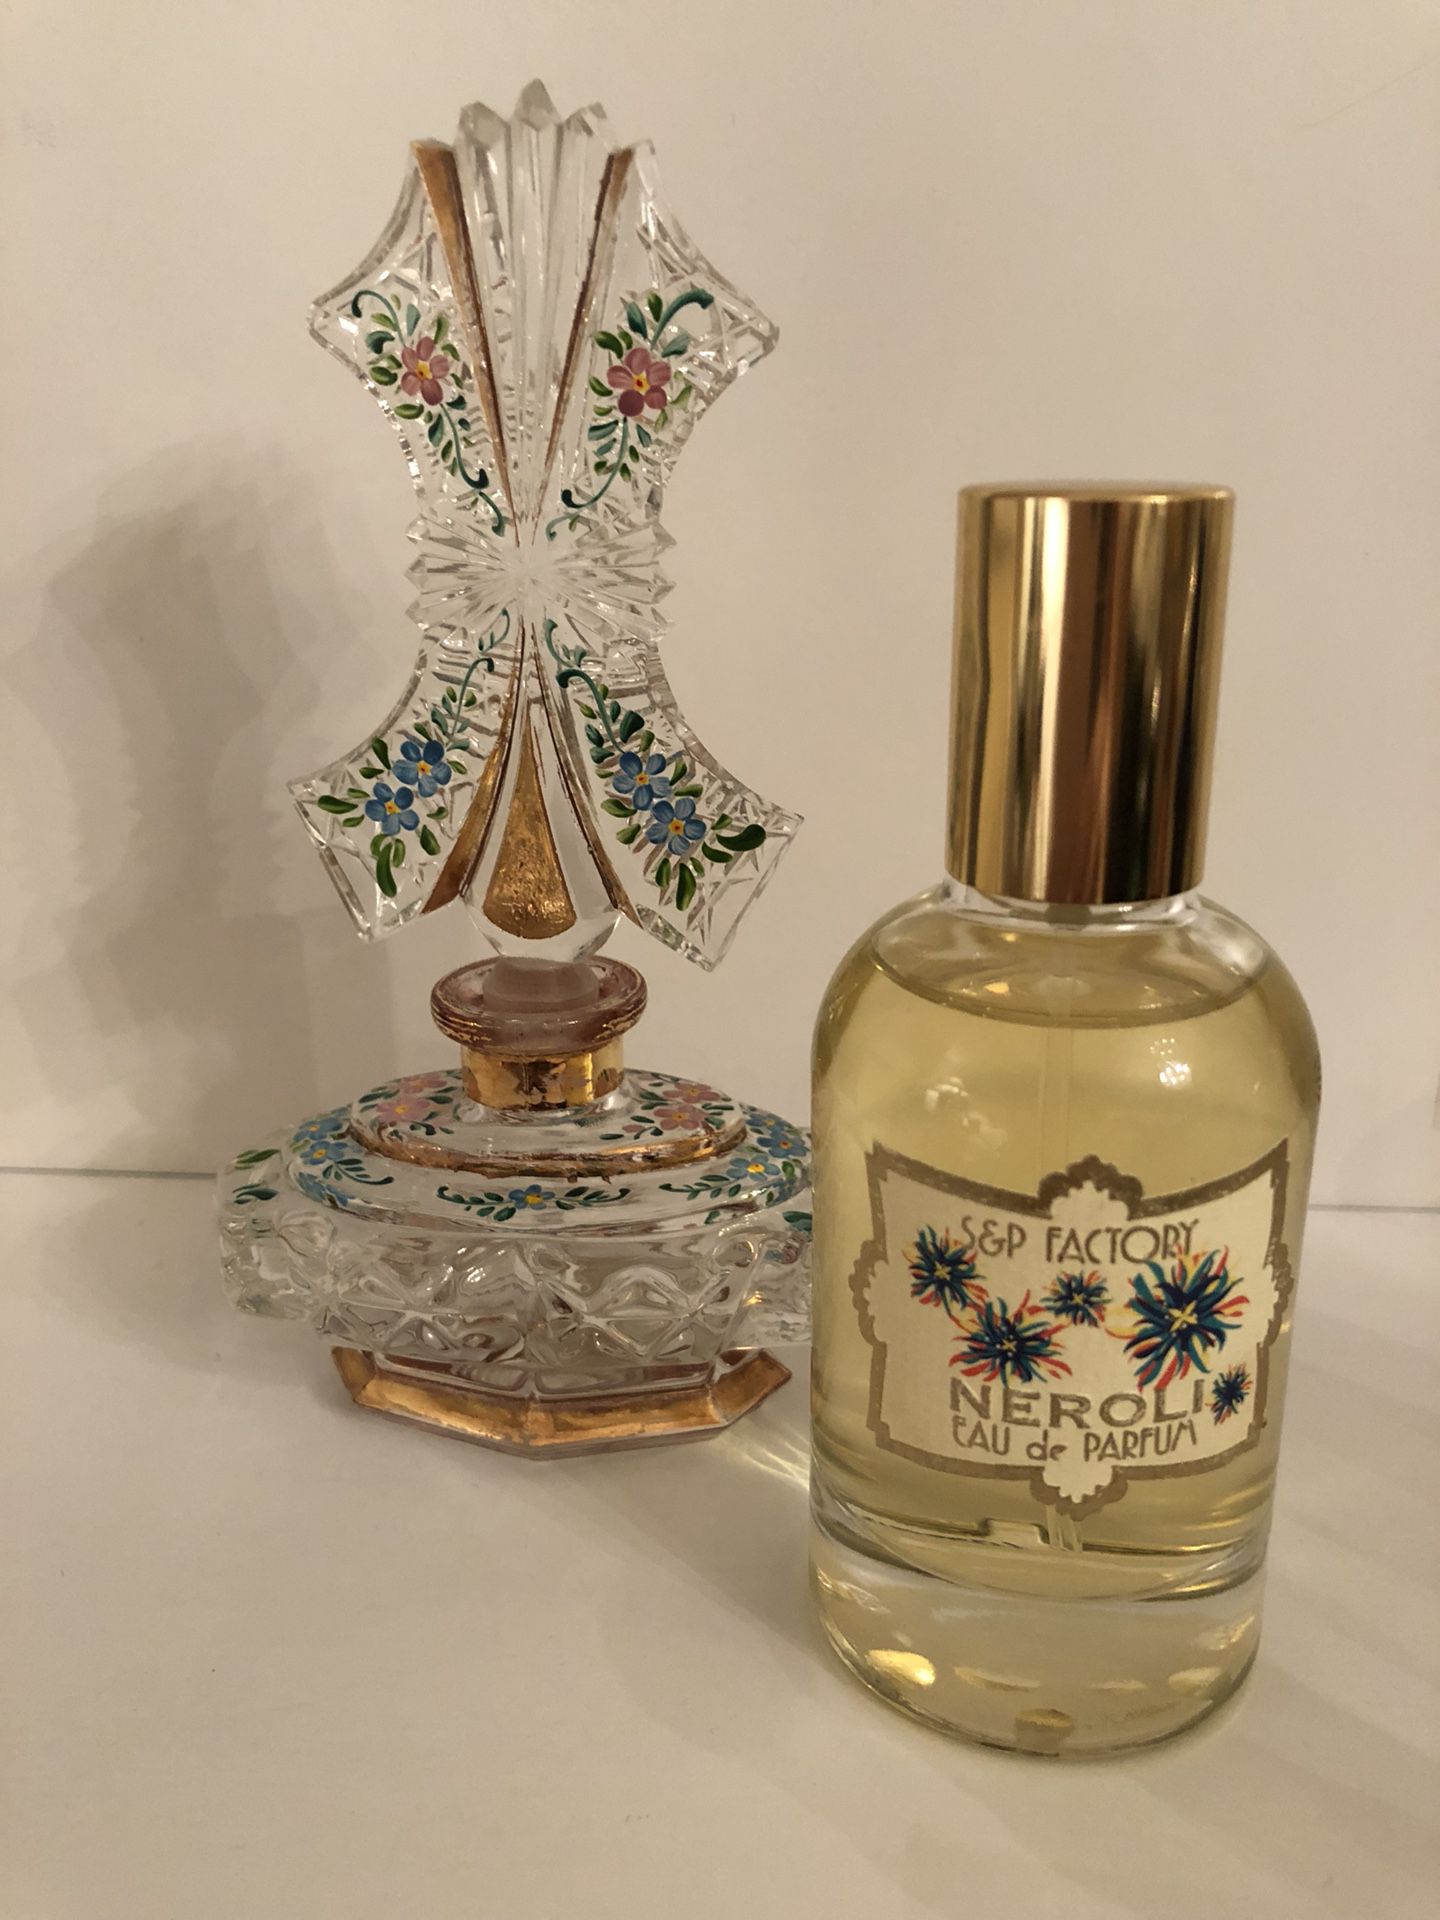 NEROLI Eau de Parfum 1.7 oz, 50 ml; Hand Cut Crystal Perfume Bottle